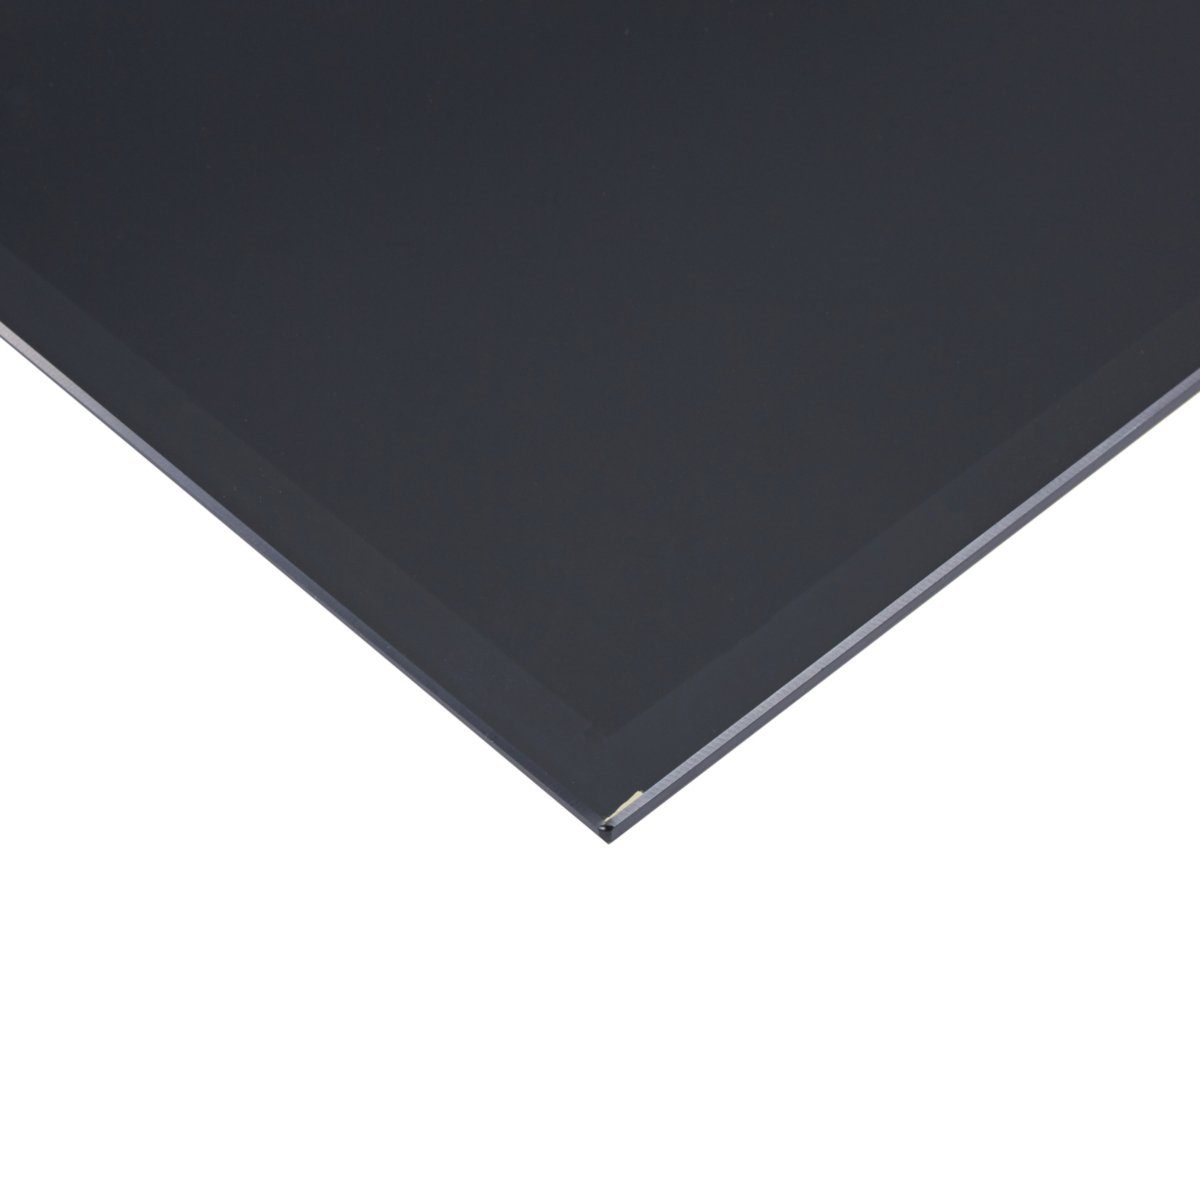 Glasplatte cm Tischplatte 70x70 Tisch, schwarz Kaminglas HOOZ quadratisch DIY